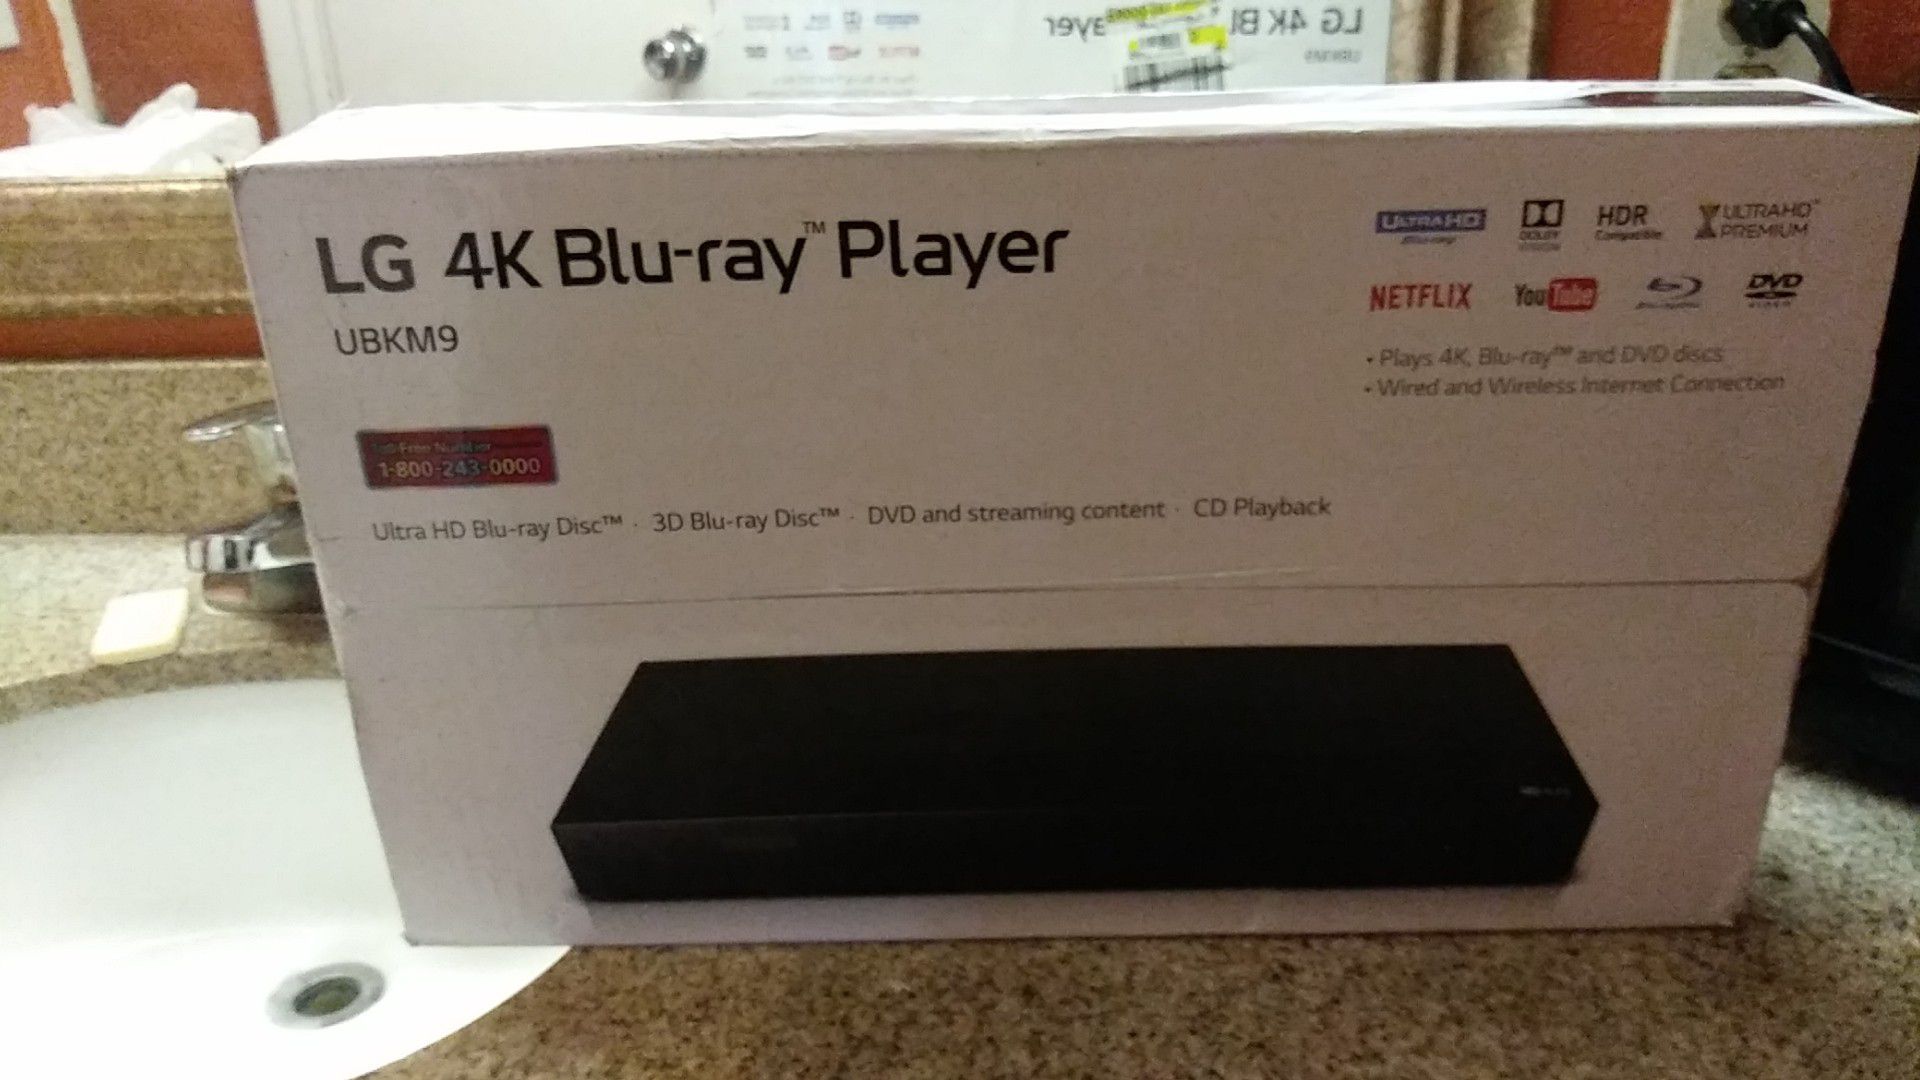 Brand new 3D 4k LG blu-ray player